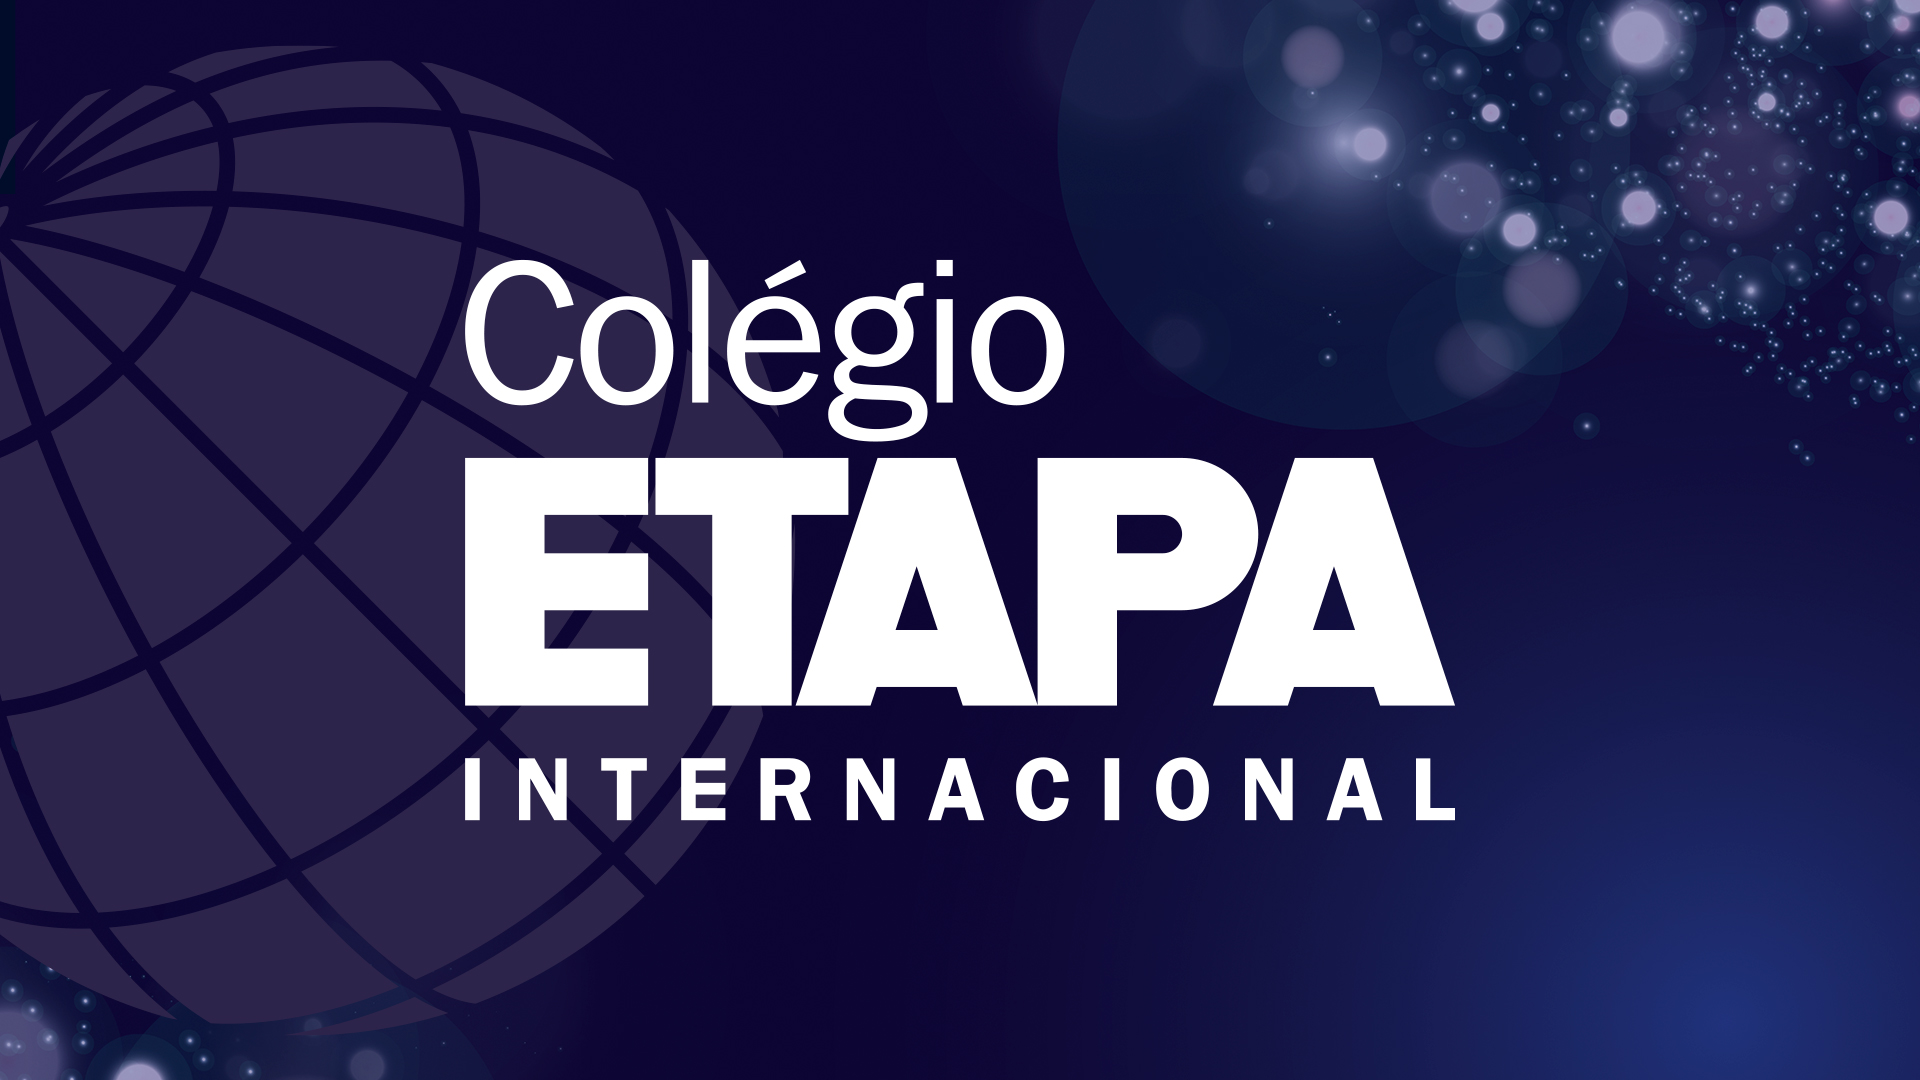 Colégio Etapa anuncia nova turma de estudos internacionais